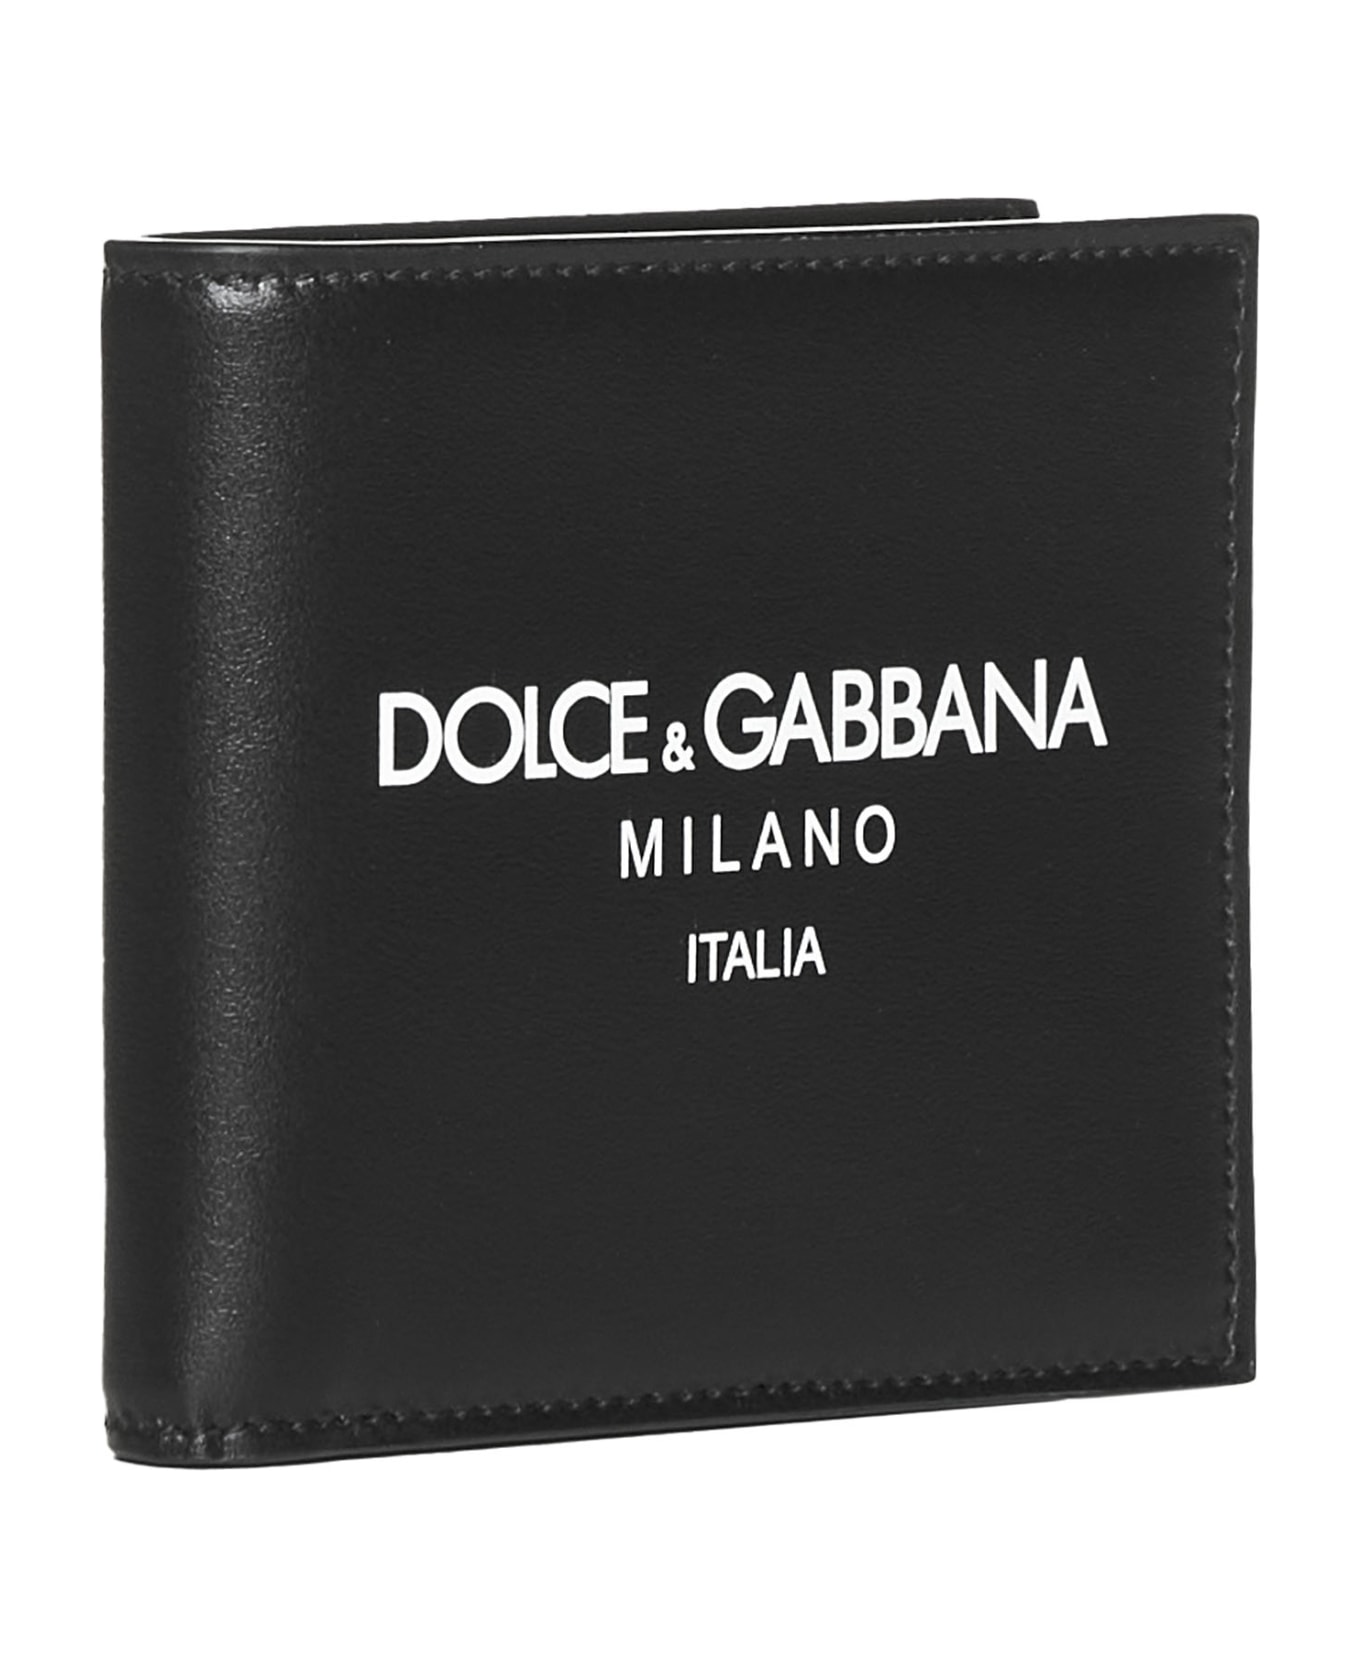 Dolce & Gabbana Wallet - Dg milano italia